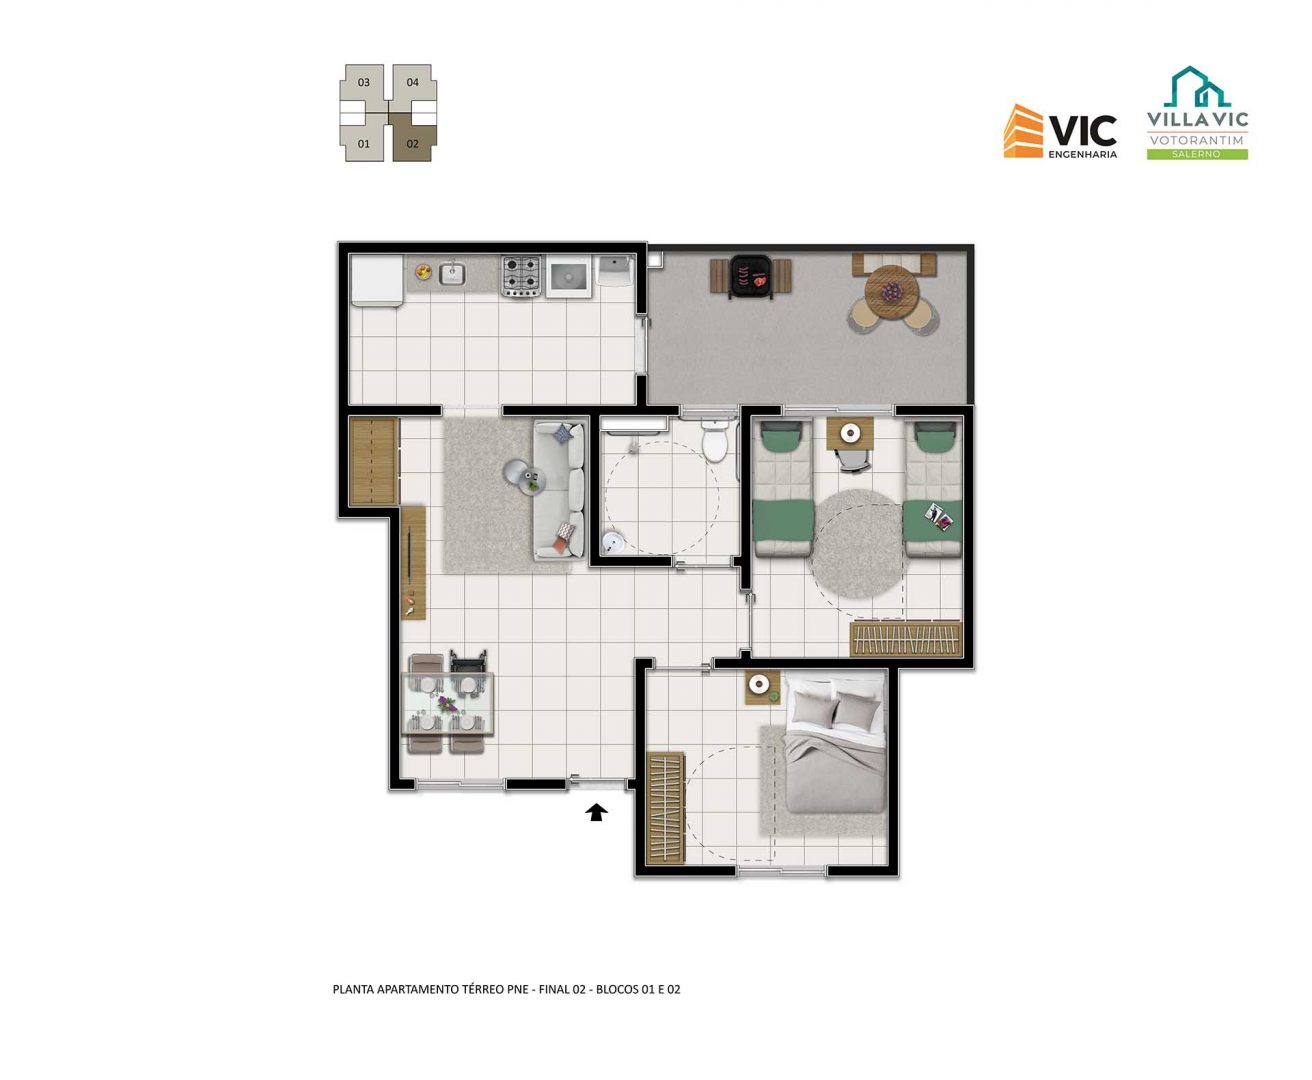 vic-engenharia-villa-vic-salerno-apartamento-terreo-pcd-bloco-1-e-2-final-2 (1)